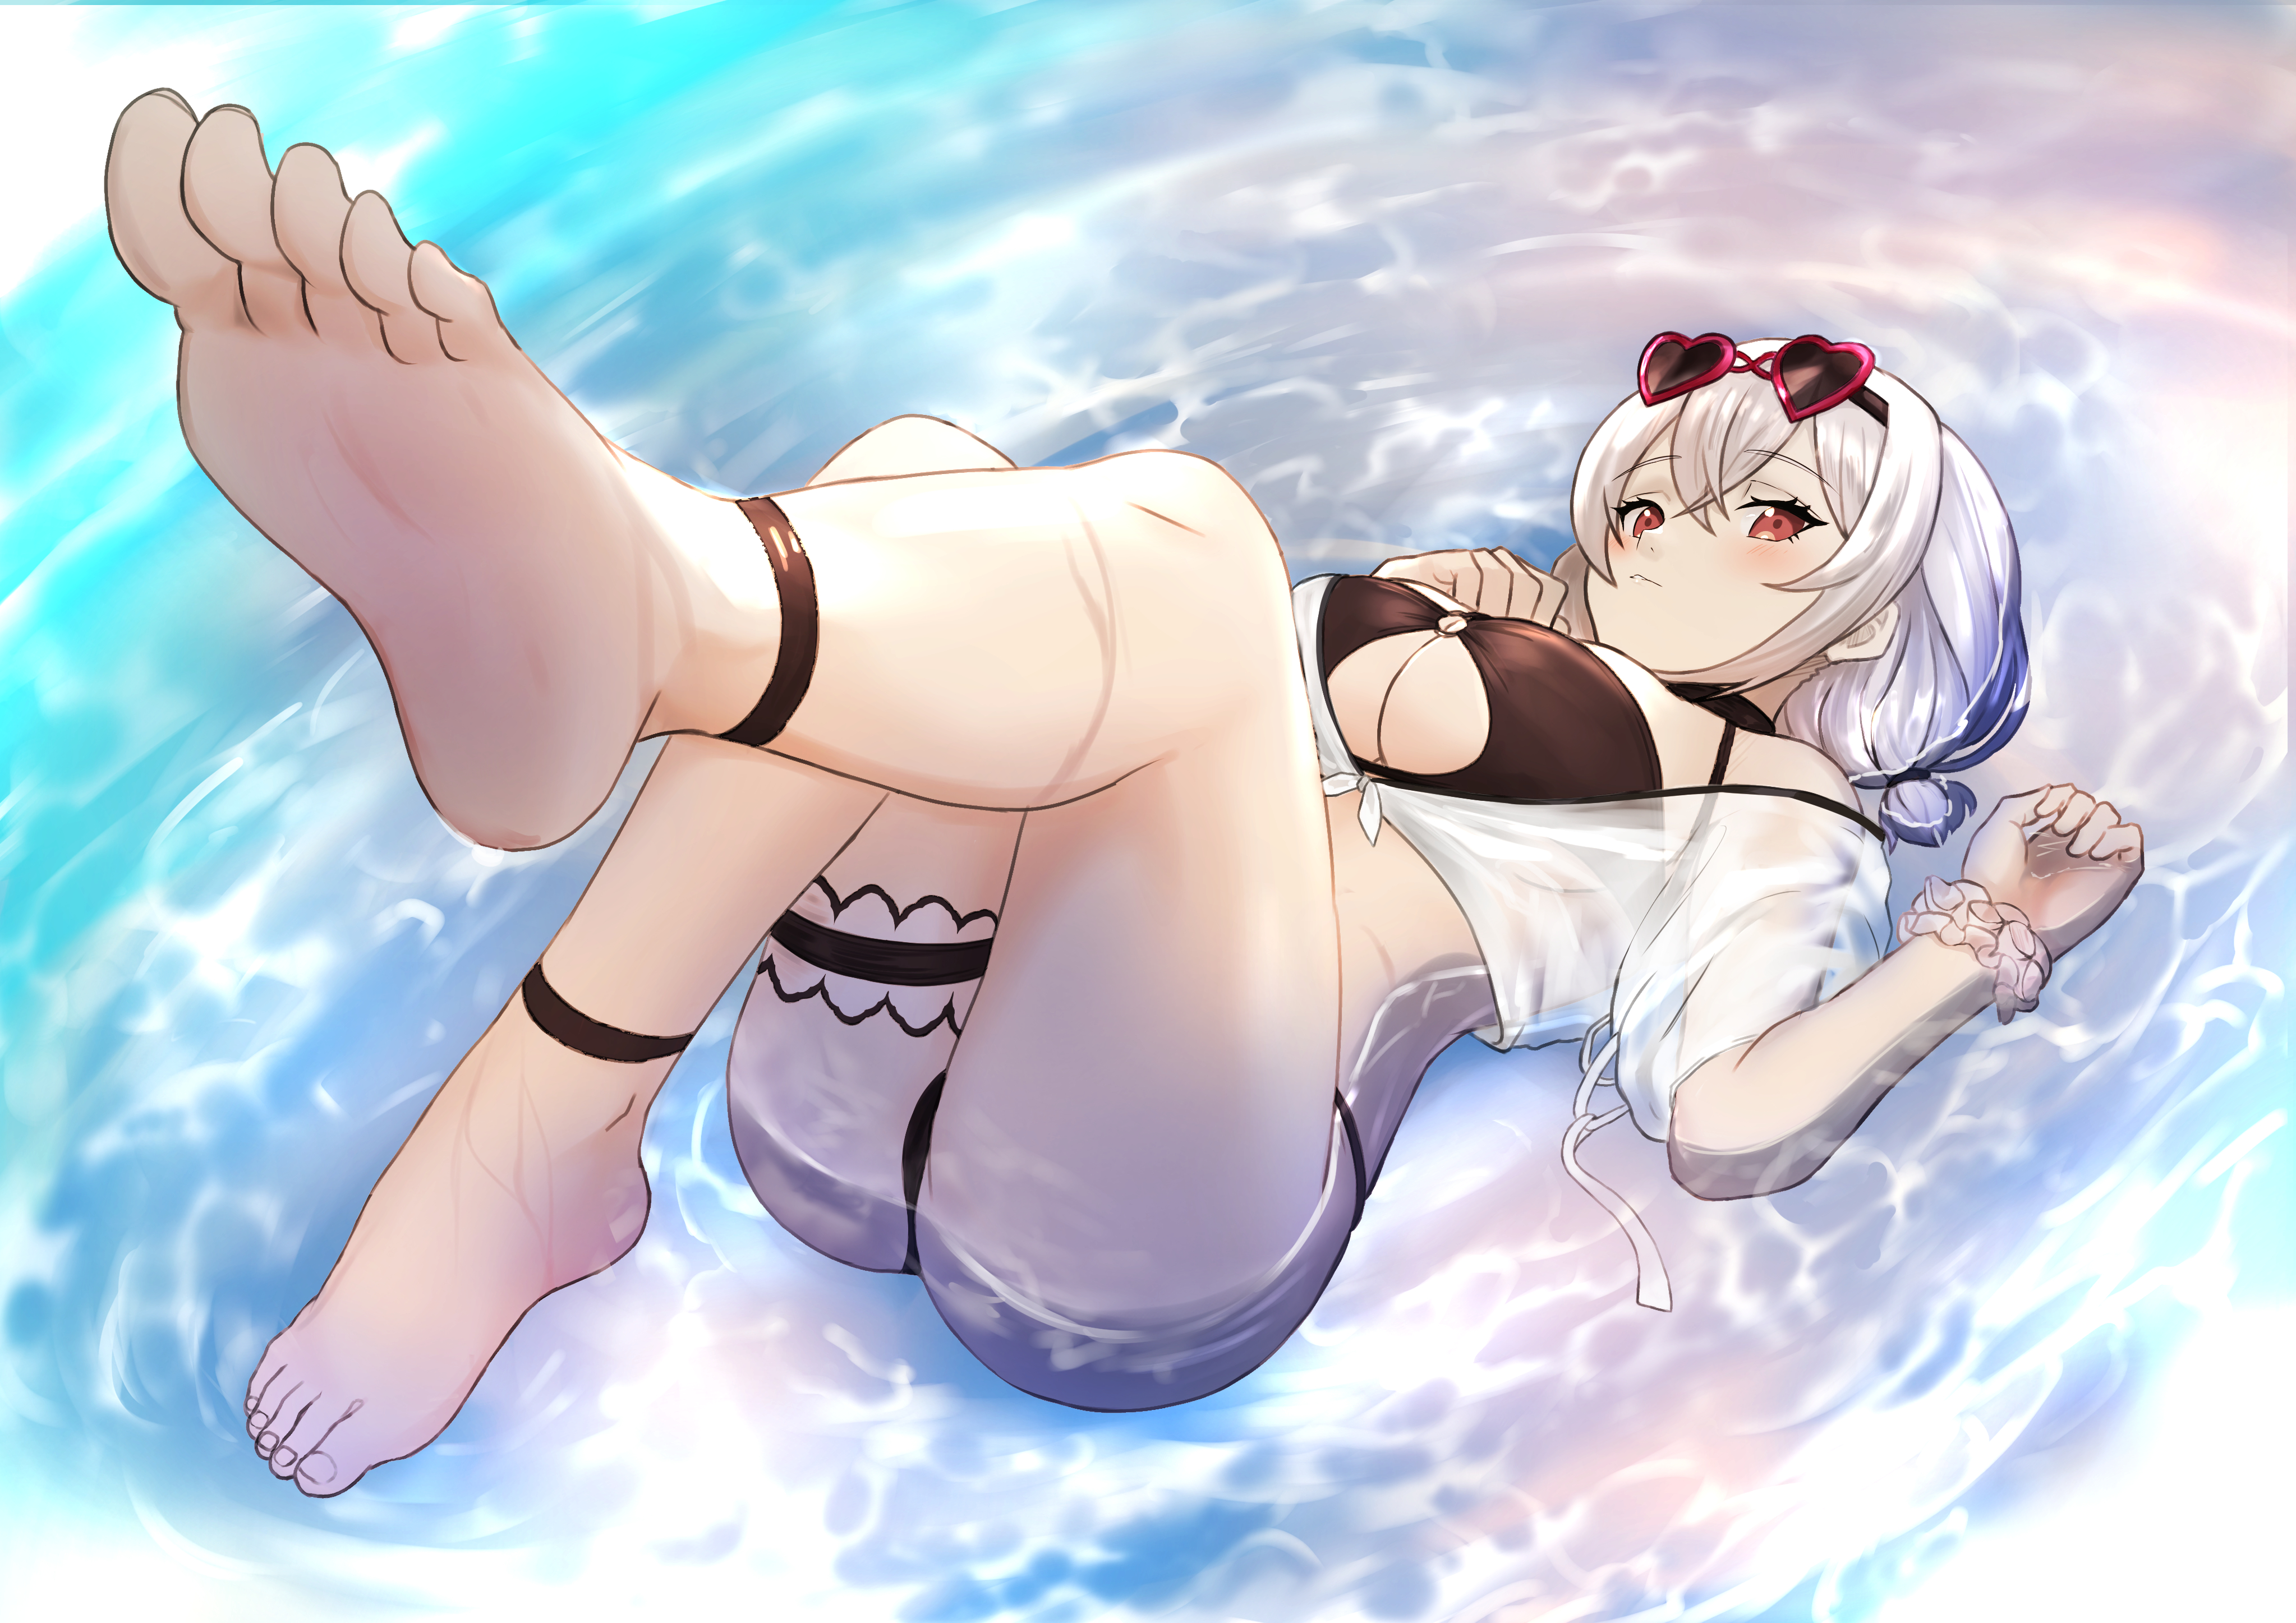 Anime 4093x2894 Art Itou Azur Lane Sirius (Azur Lane) anime anime girls legs ass feet barefoot water wet bikini